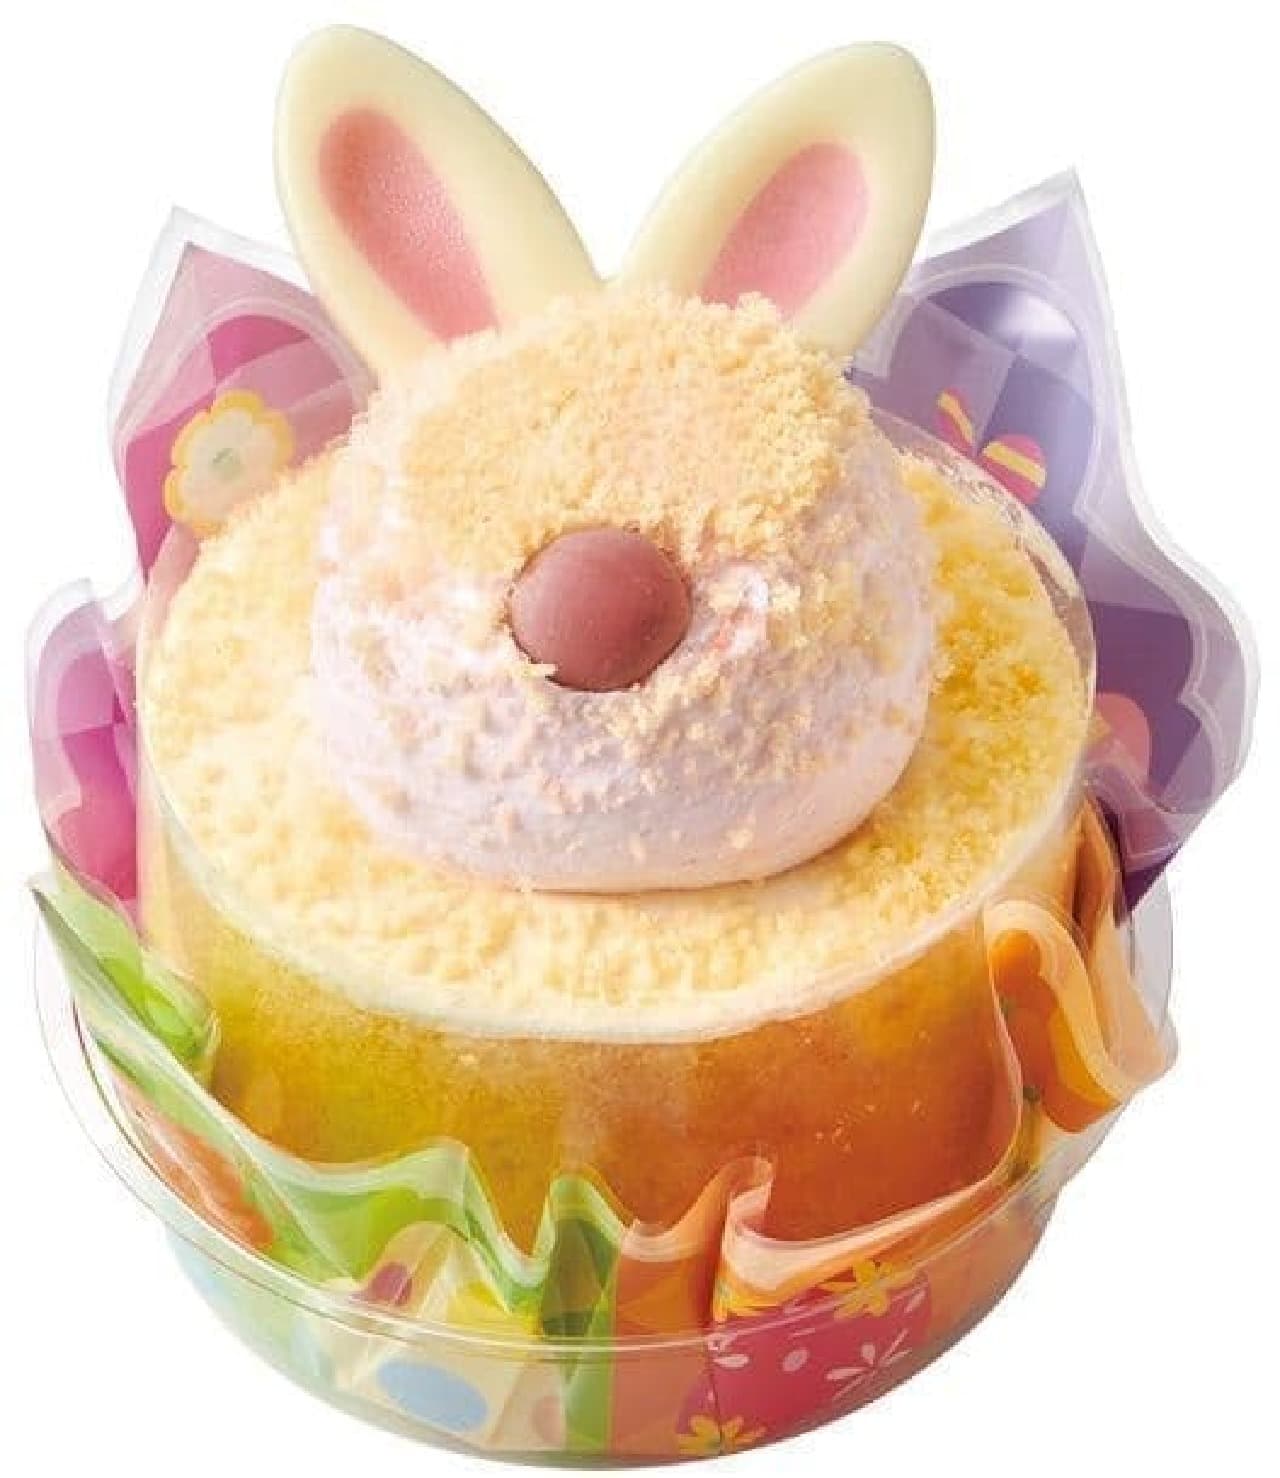 Fujiya pastry shop "Easter Usa-chan Fruit Roll"